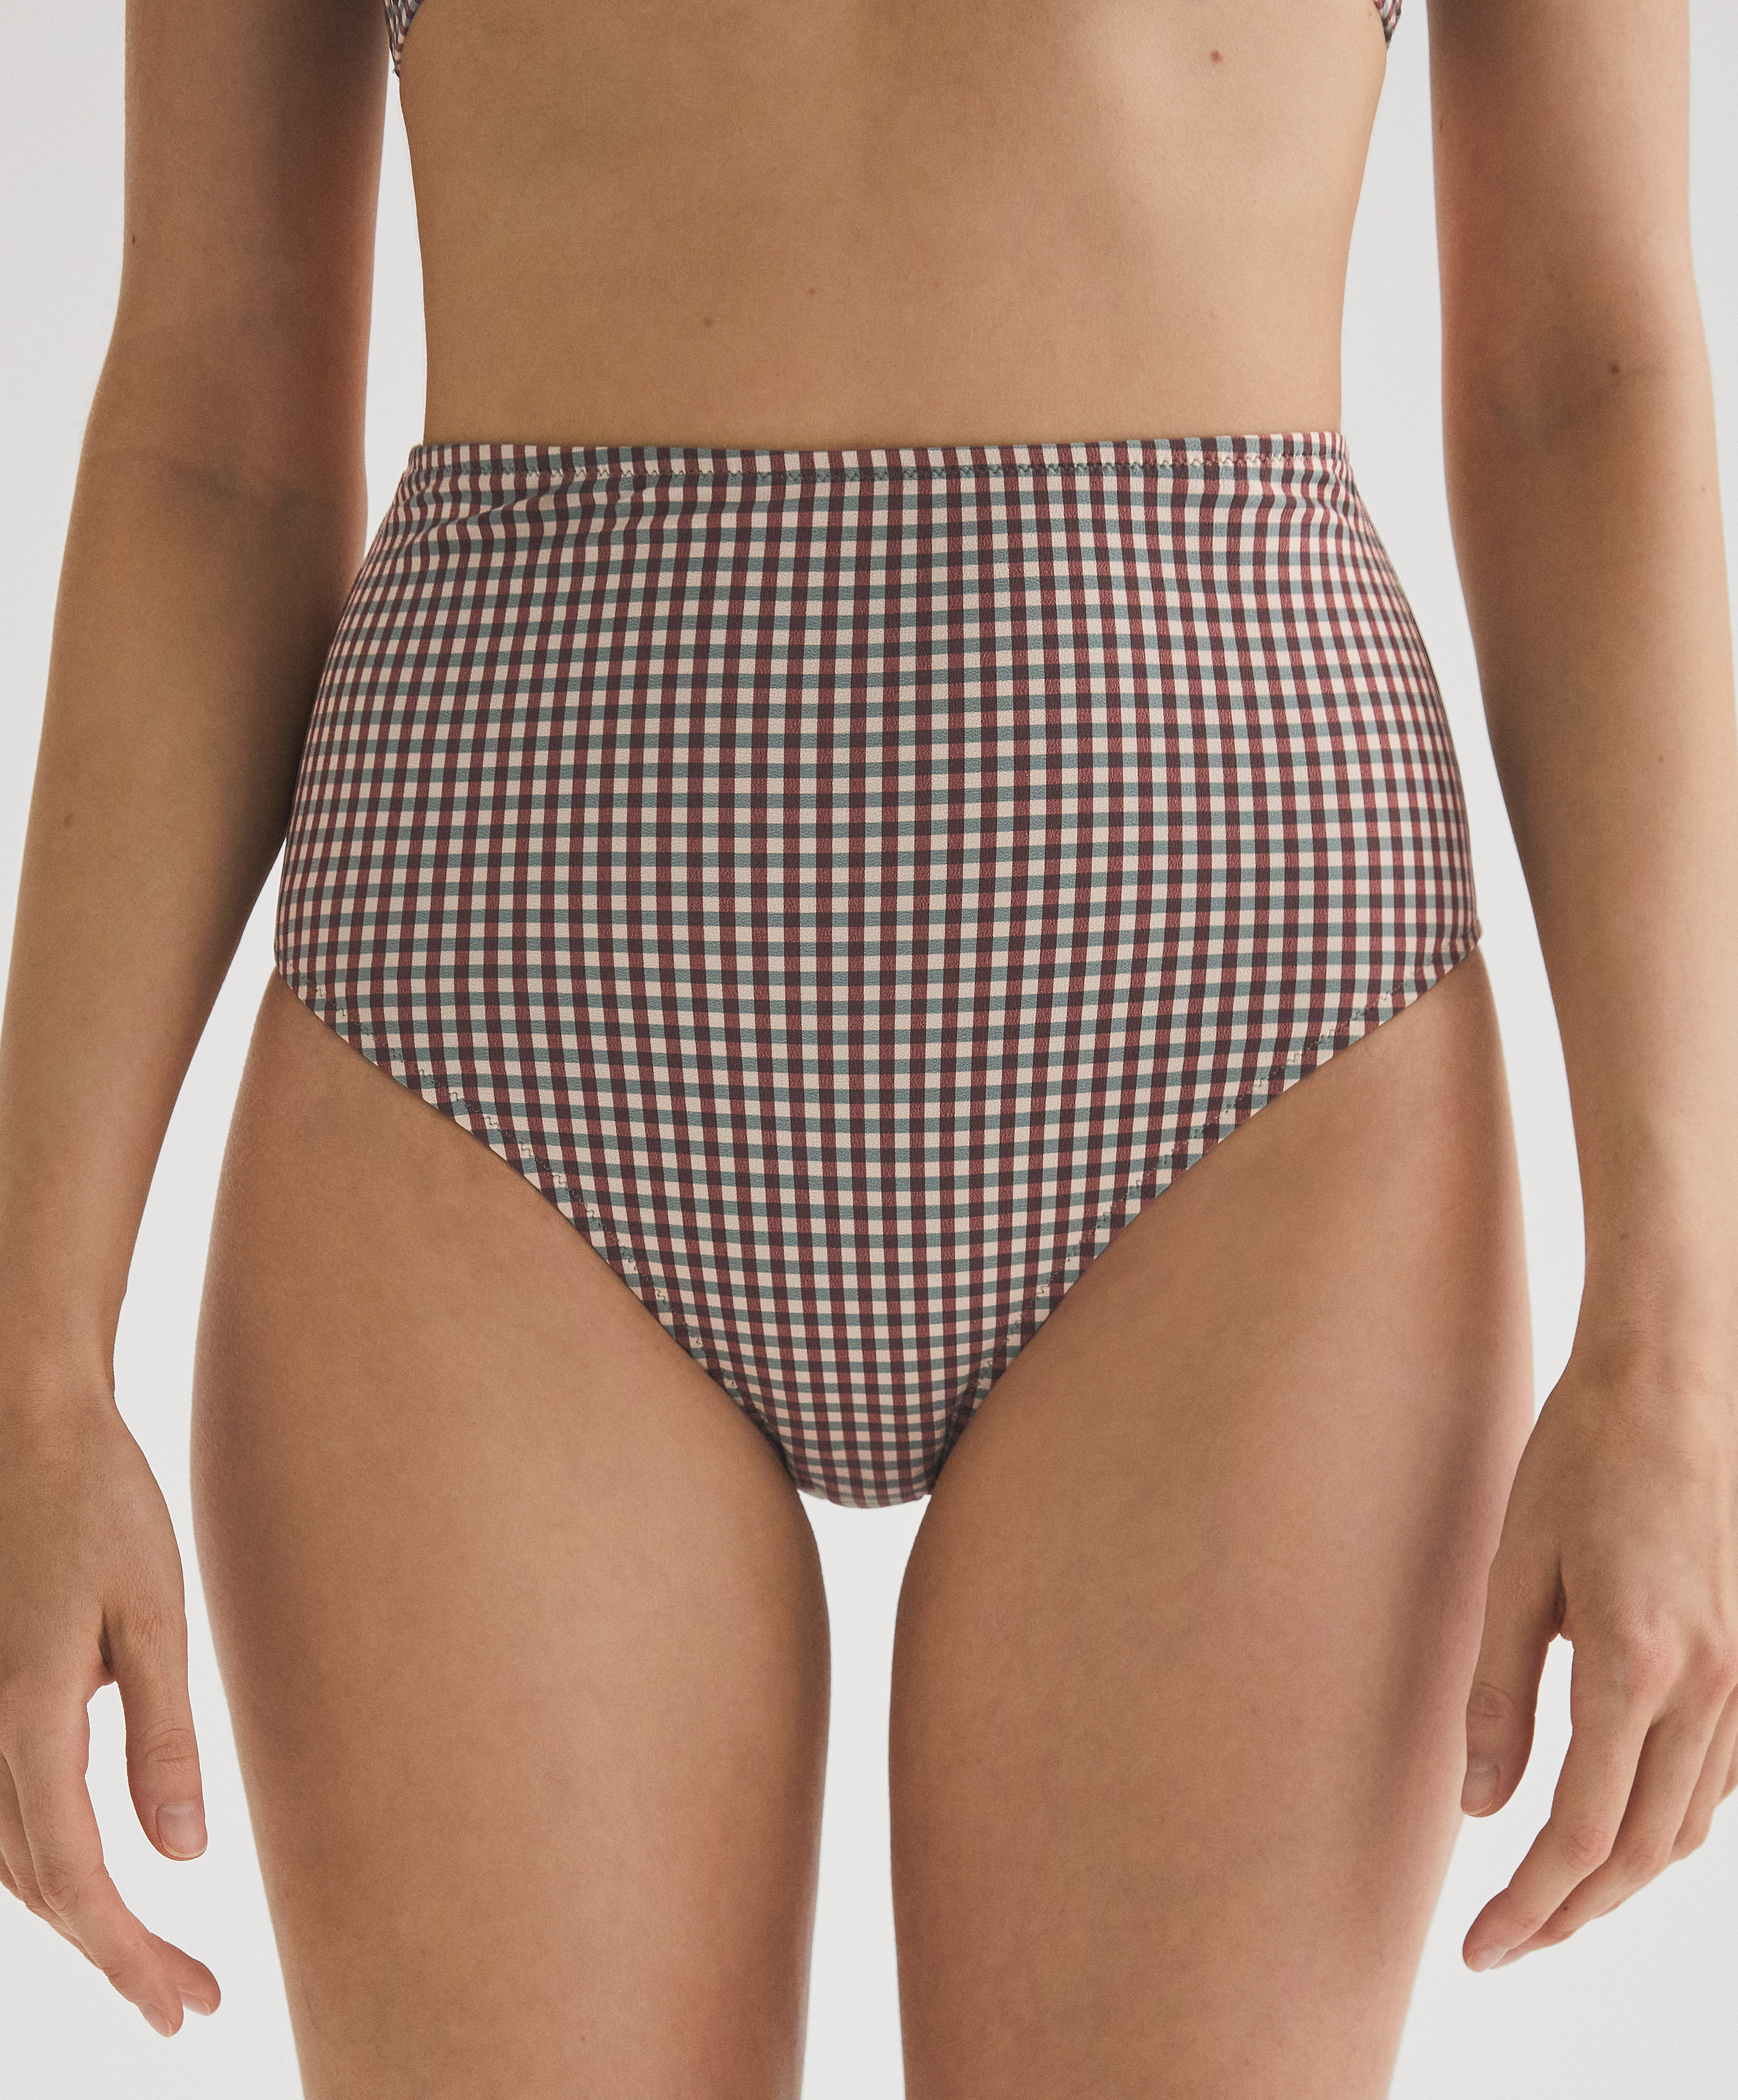 Gingham high-waisted bikini briefs